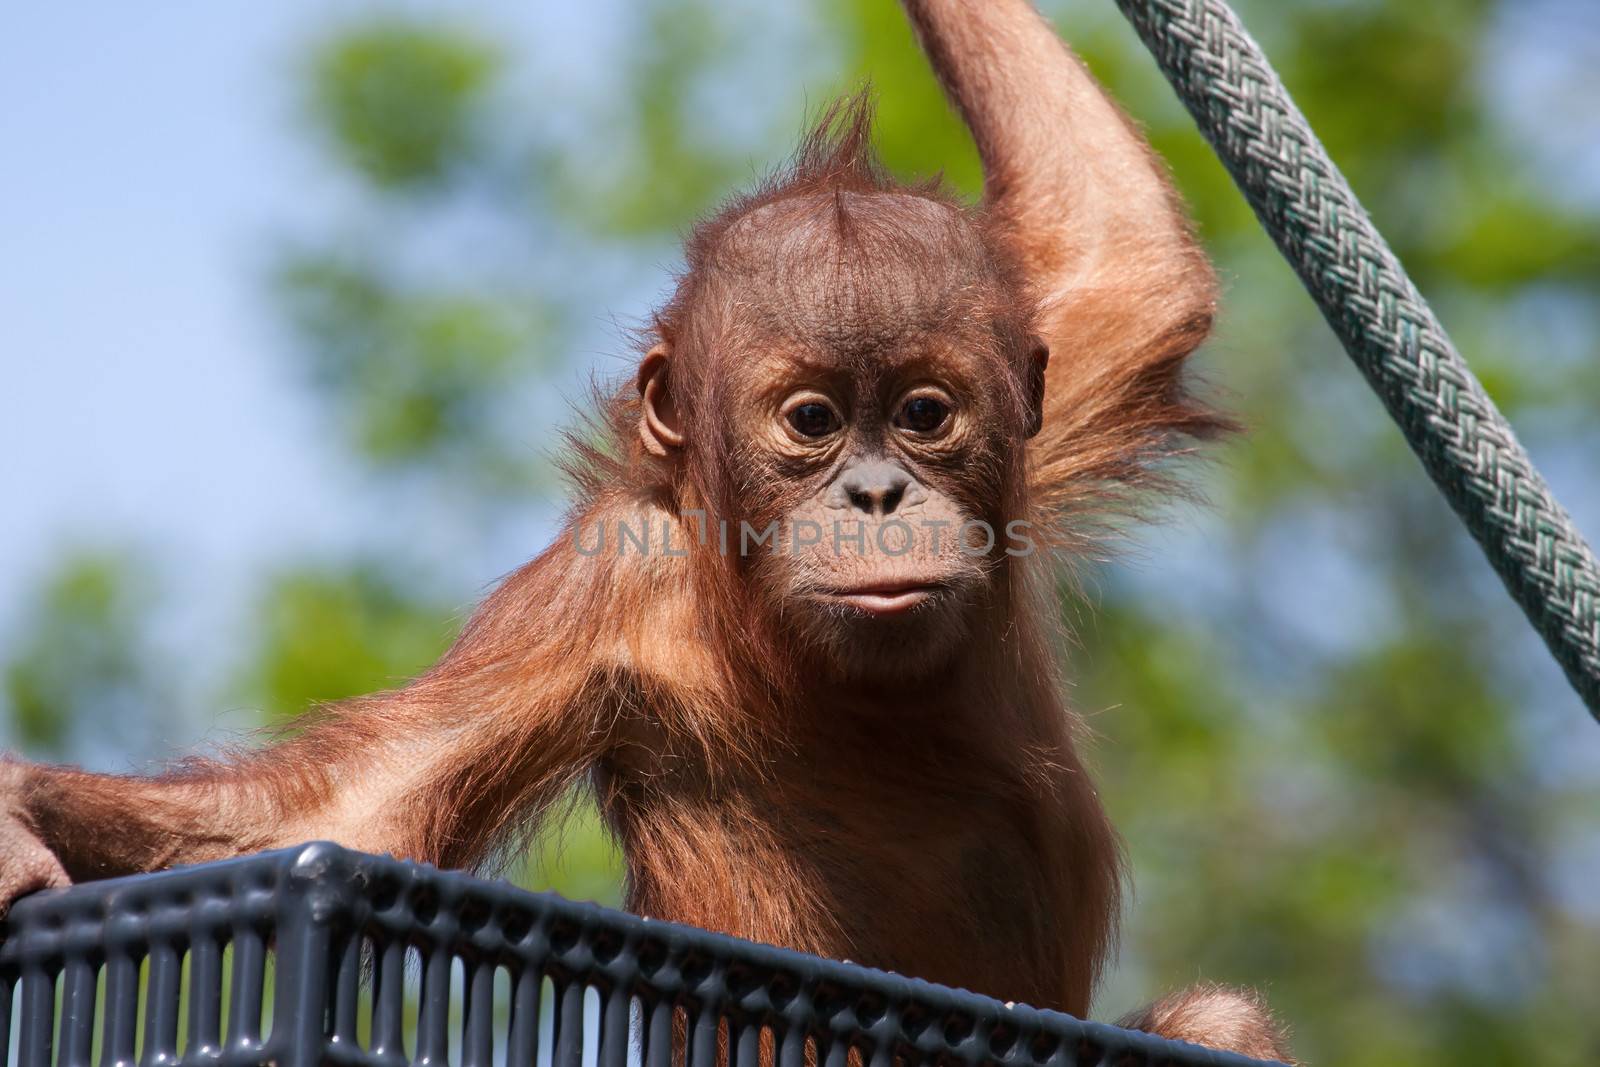 Baby Orangutan by Coffee999